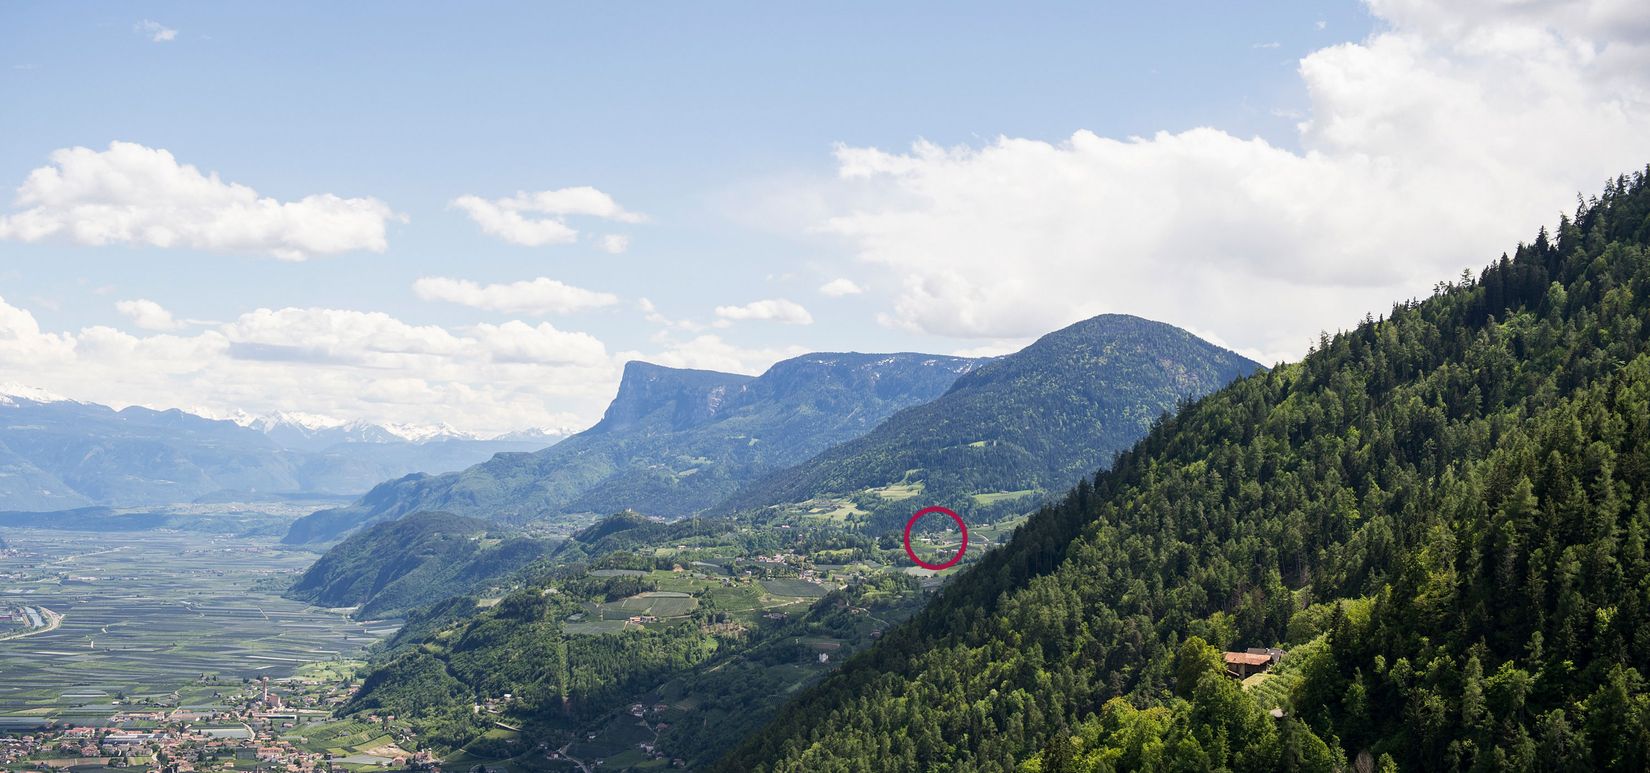 Foiana-Lana in Alto Adige